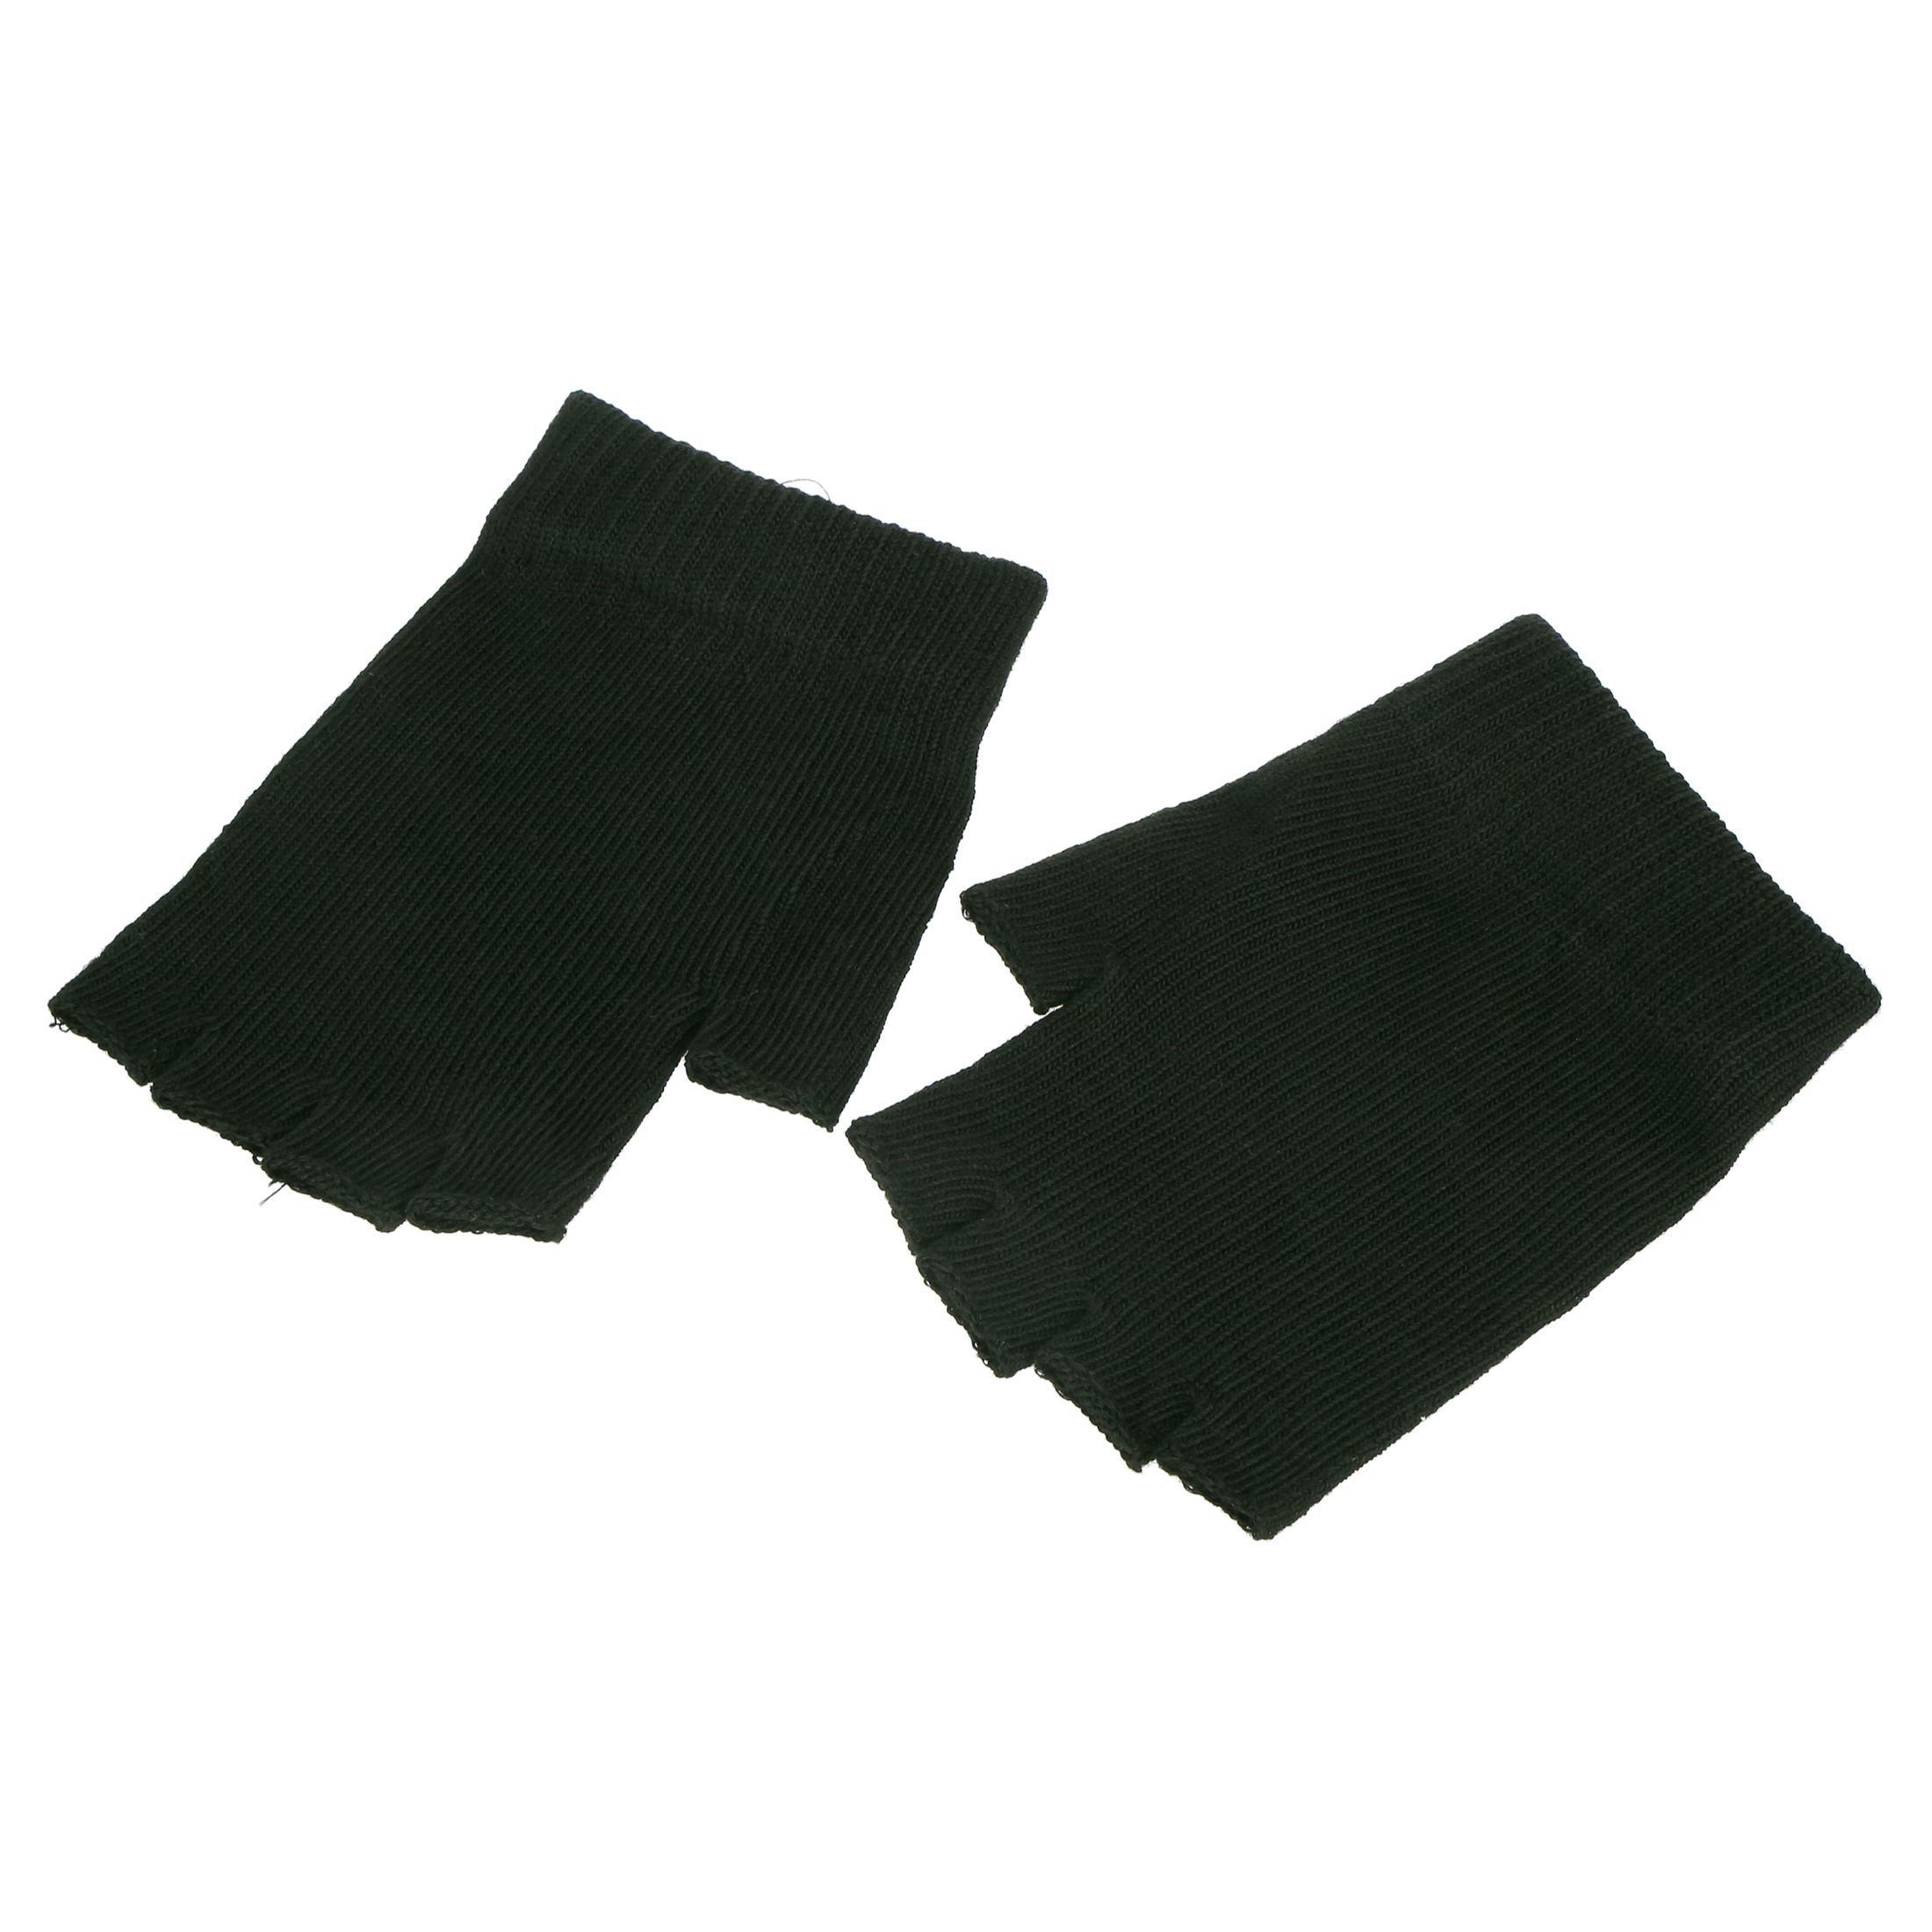 Gaiam Grippy Yoga Gloves, Small/Medium, One-Size, Black - image 7 of 9